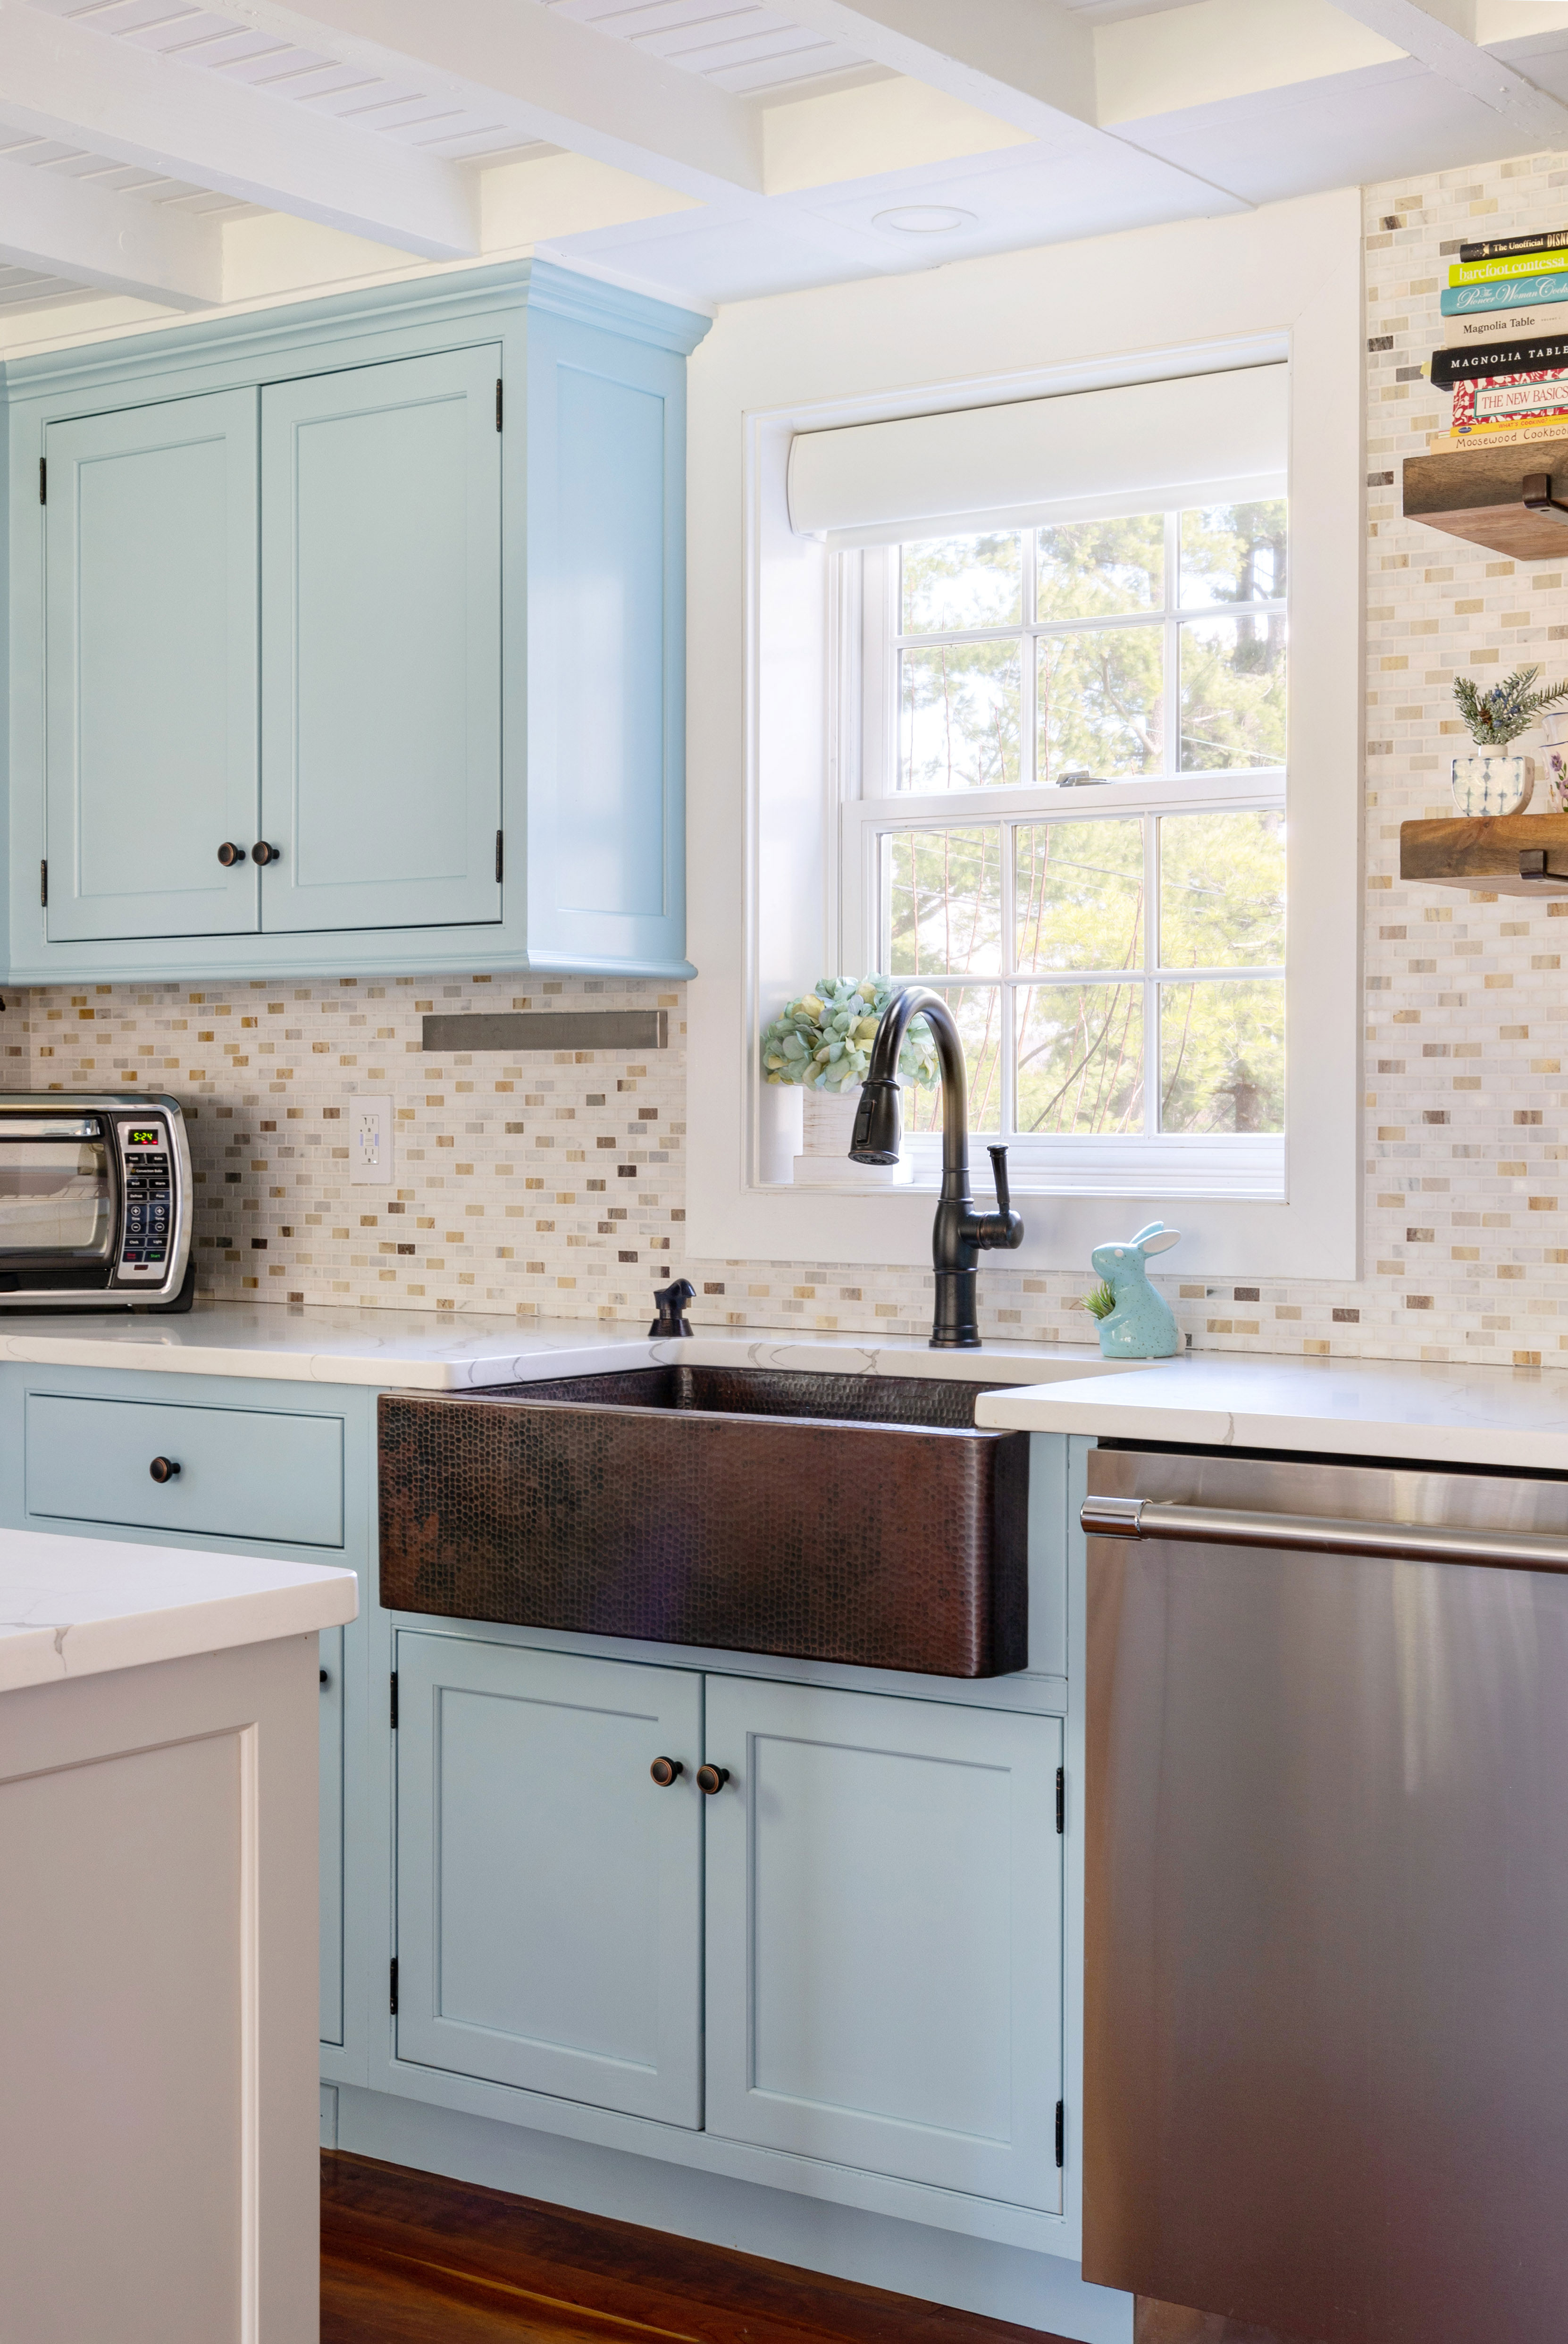 Classic kitchen design idea with sink idea featuring, white kitchen cabinets, marble kitchen countertops and brick backsplash